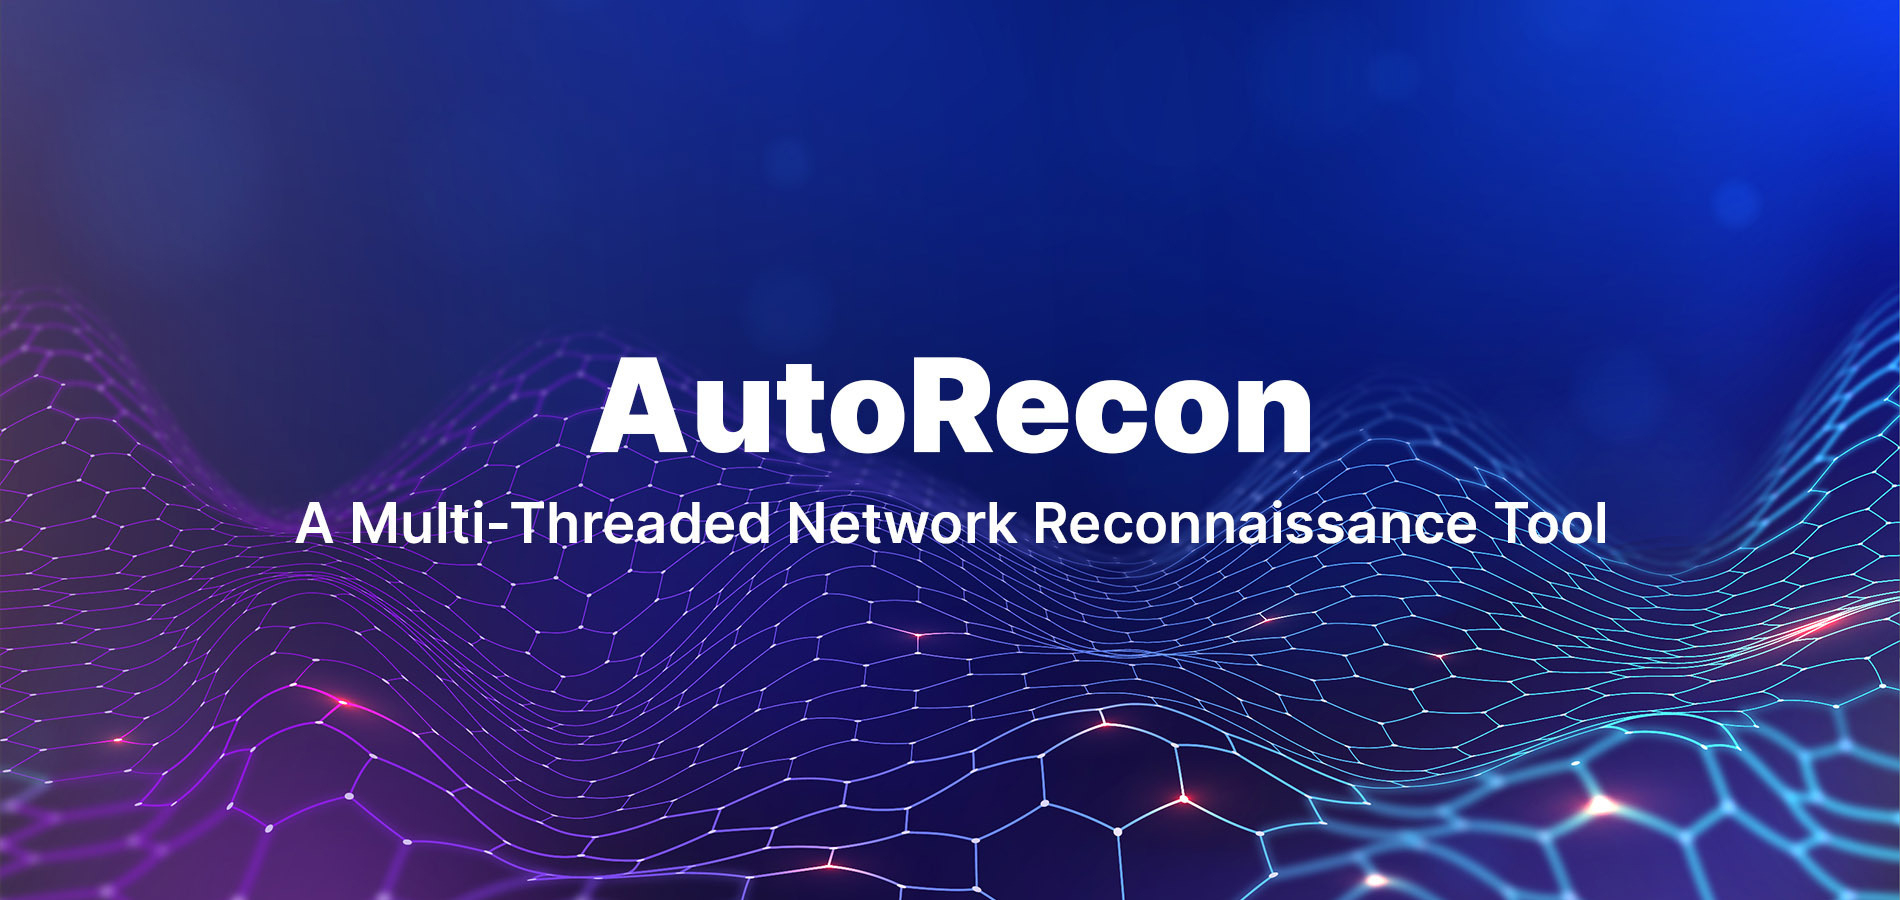 AutoRecon: A Multi-Threaded Network Reconnaissance Tool.